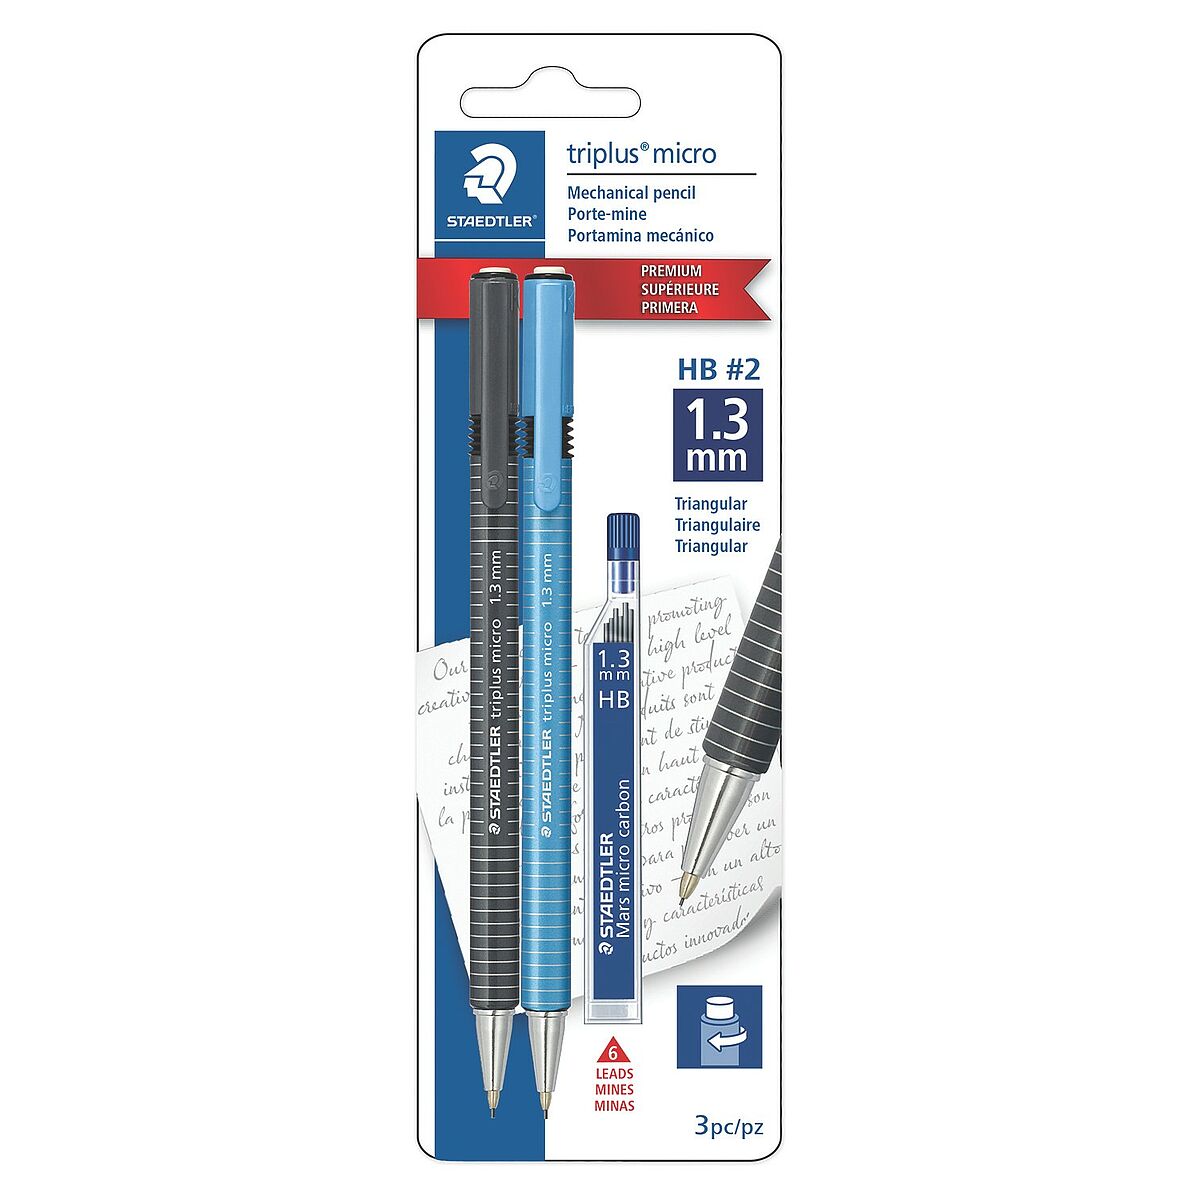 triplus® micro 774 - Triangular mechanical pencil | STAEDTLER